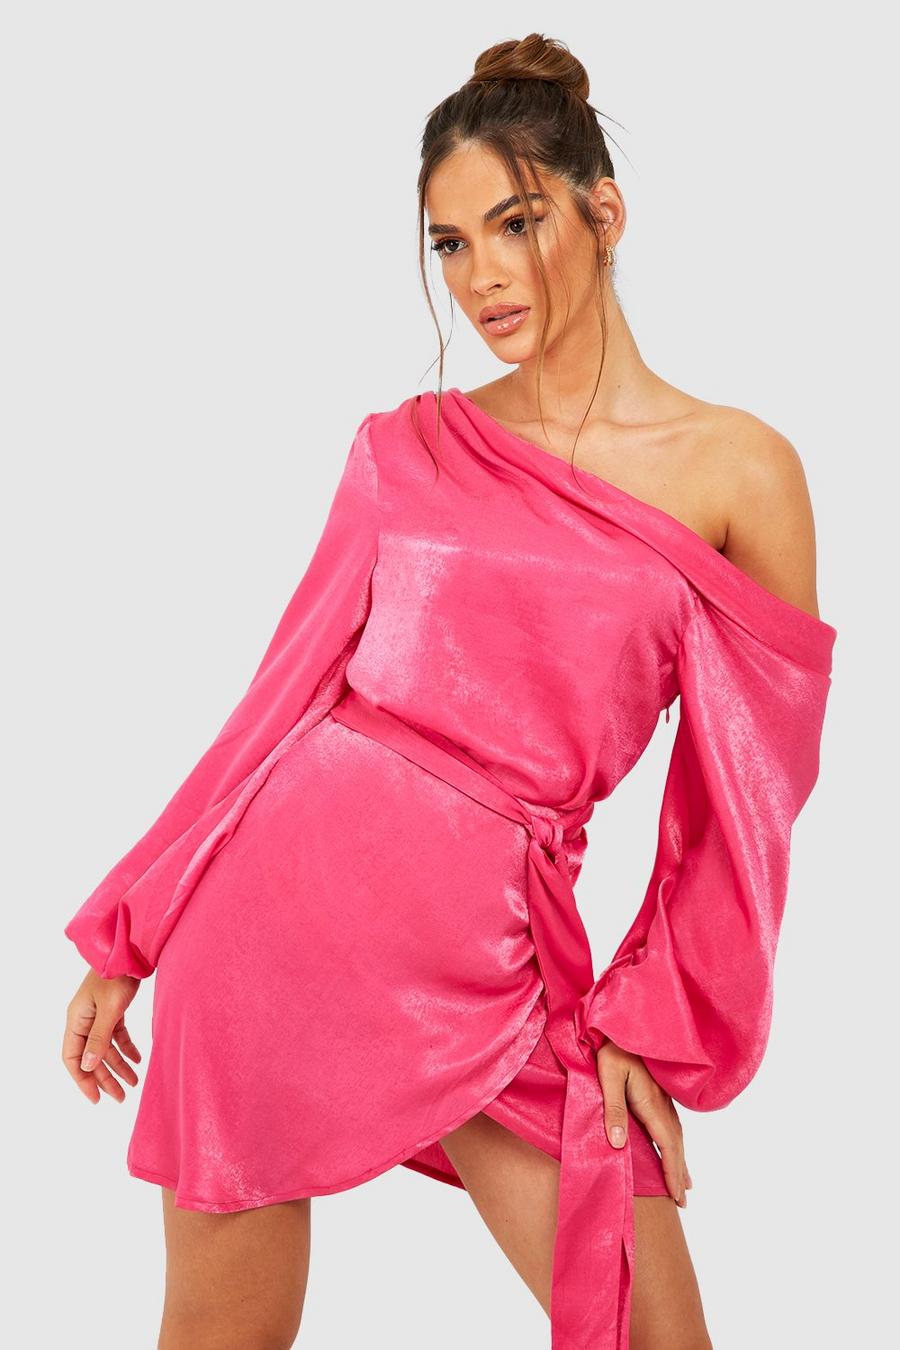 Einärmliges drapiertes Satin-Minikleid, Hot pink